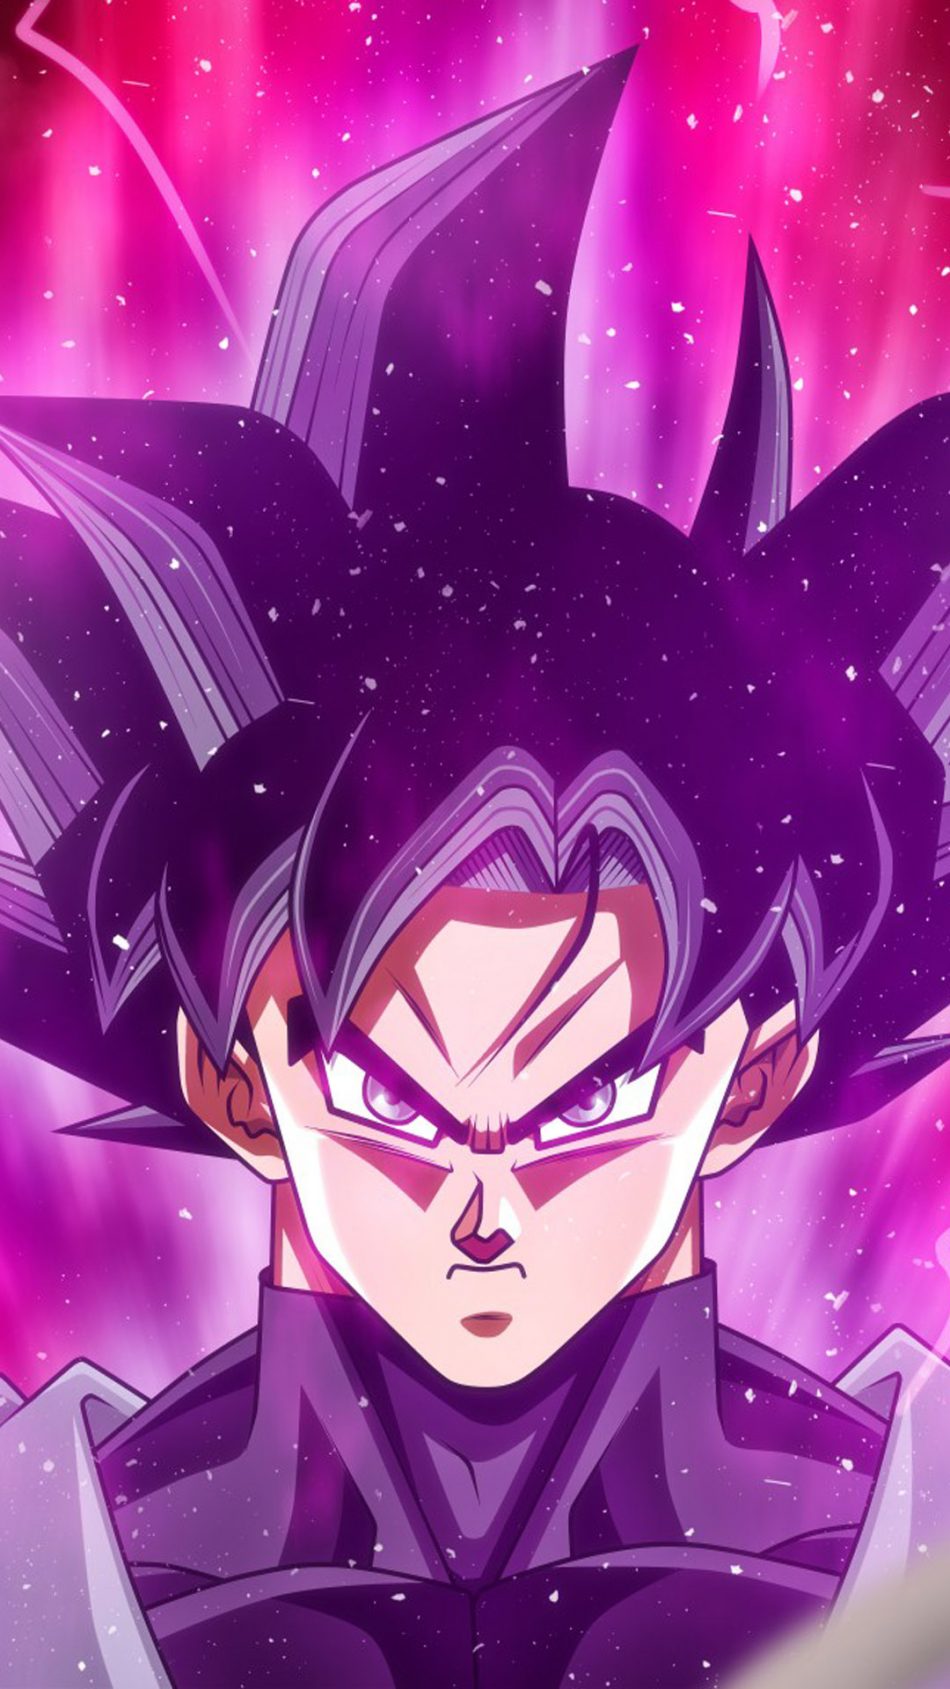 Goku Black Wallpaper 4K : Free Download Dragon Ball Super Black Goku